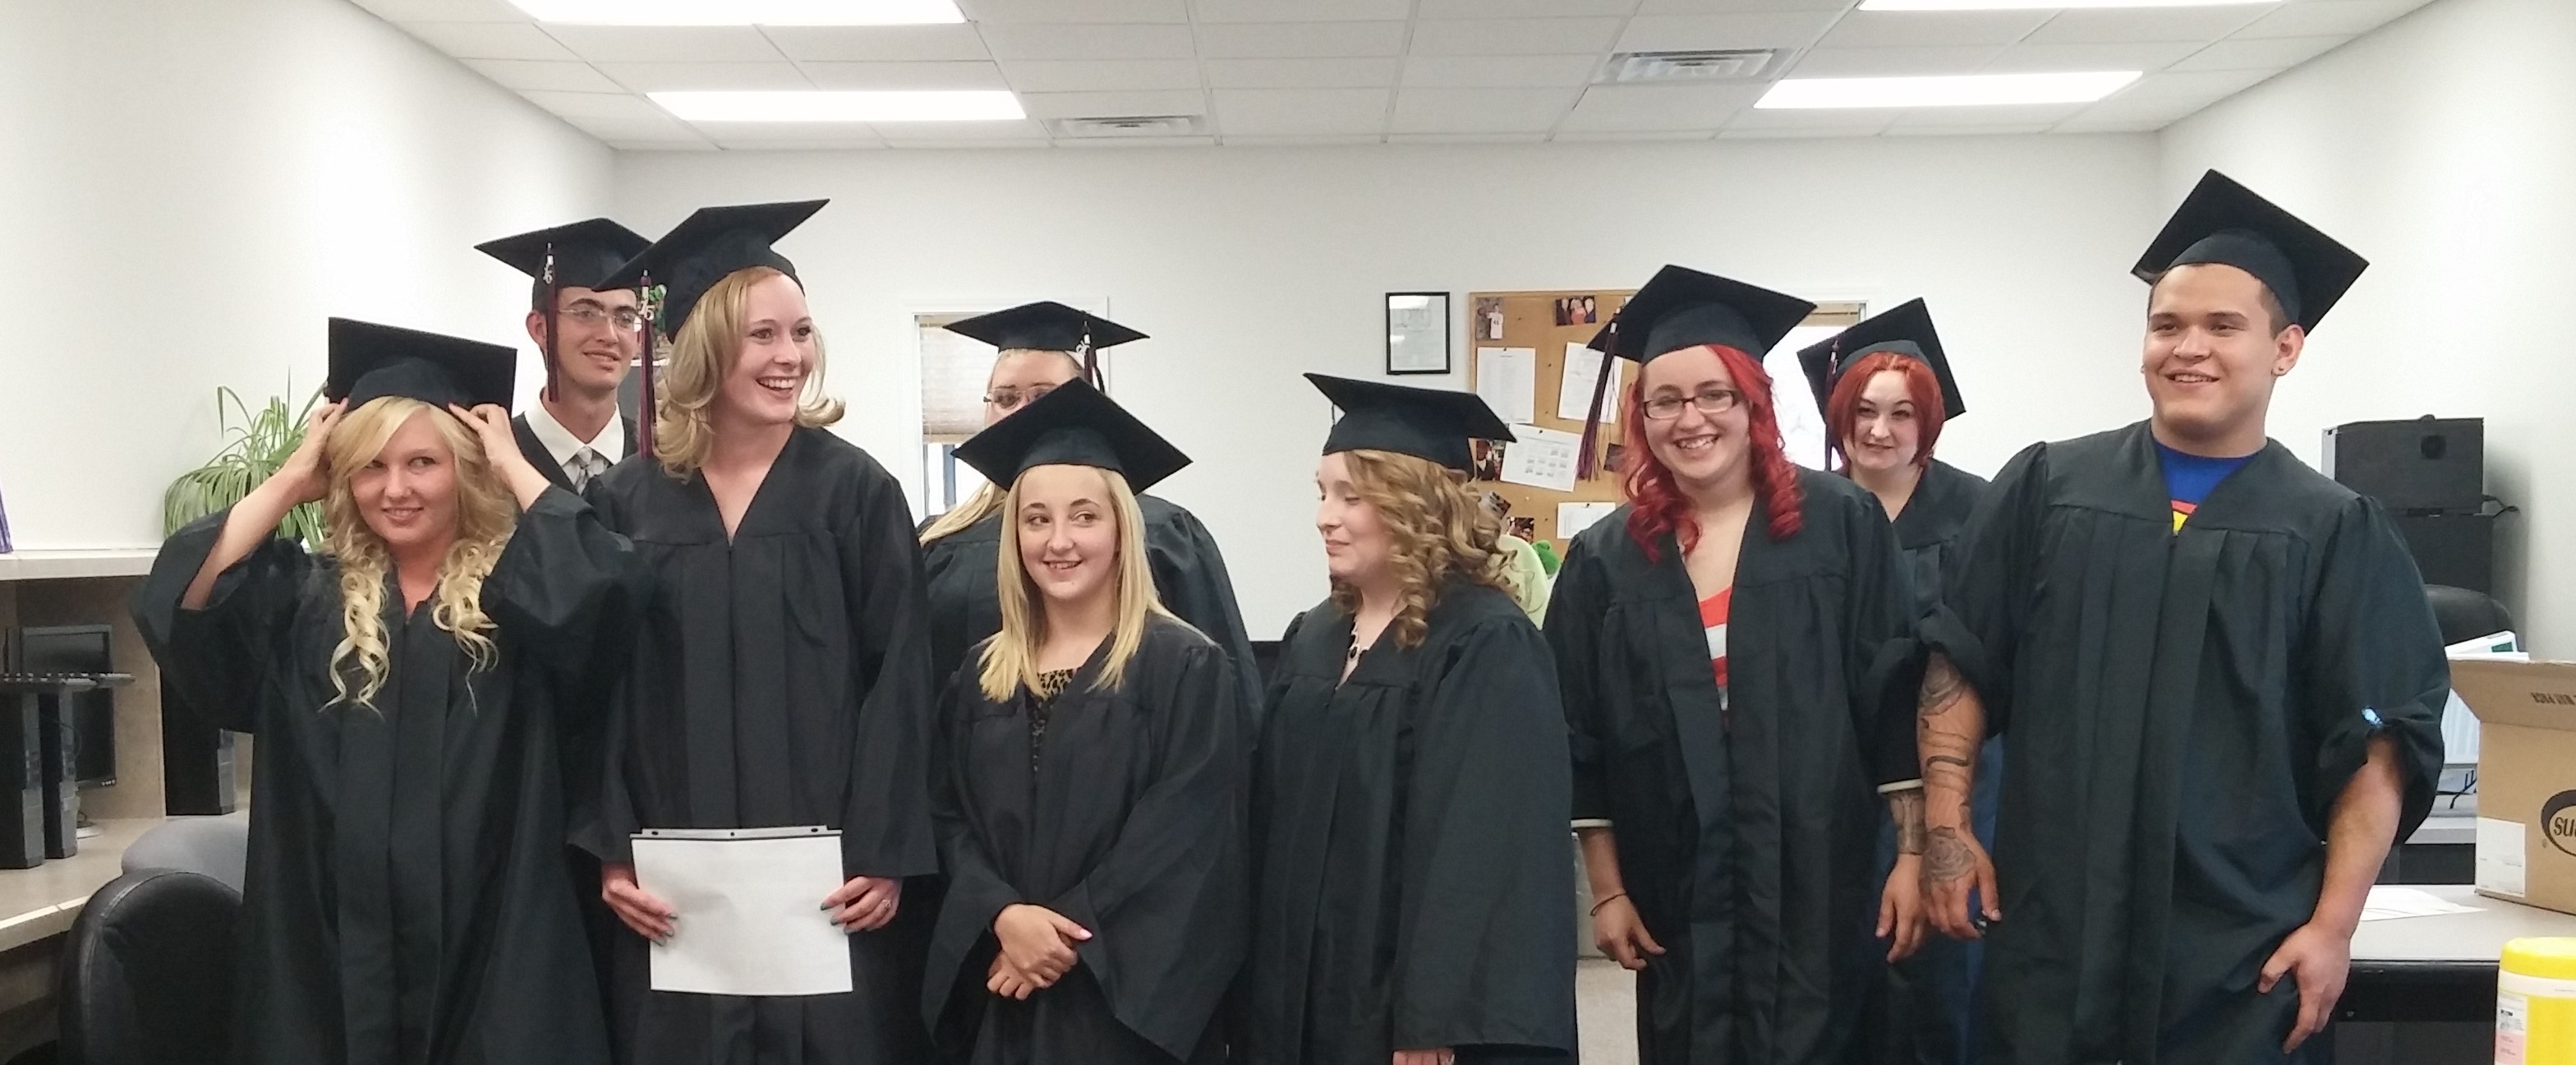 Class of 2015 Graduates